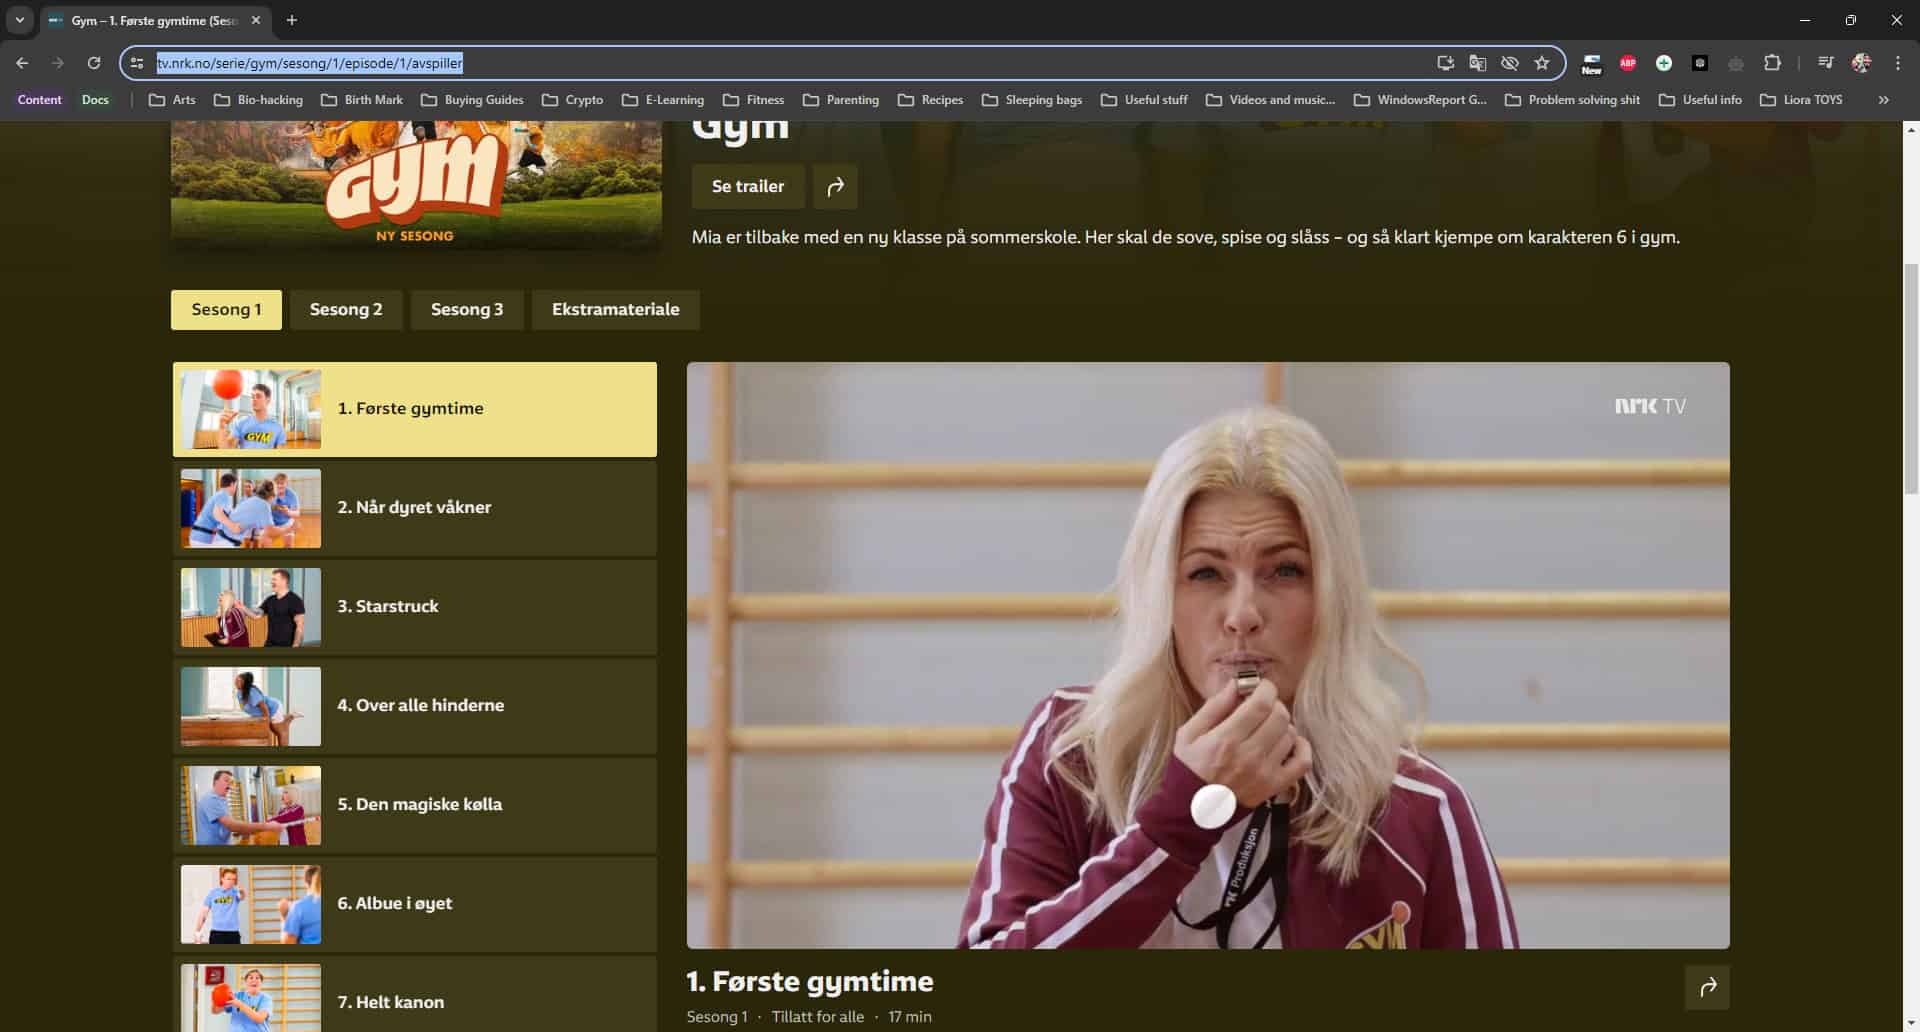 NRK video page